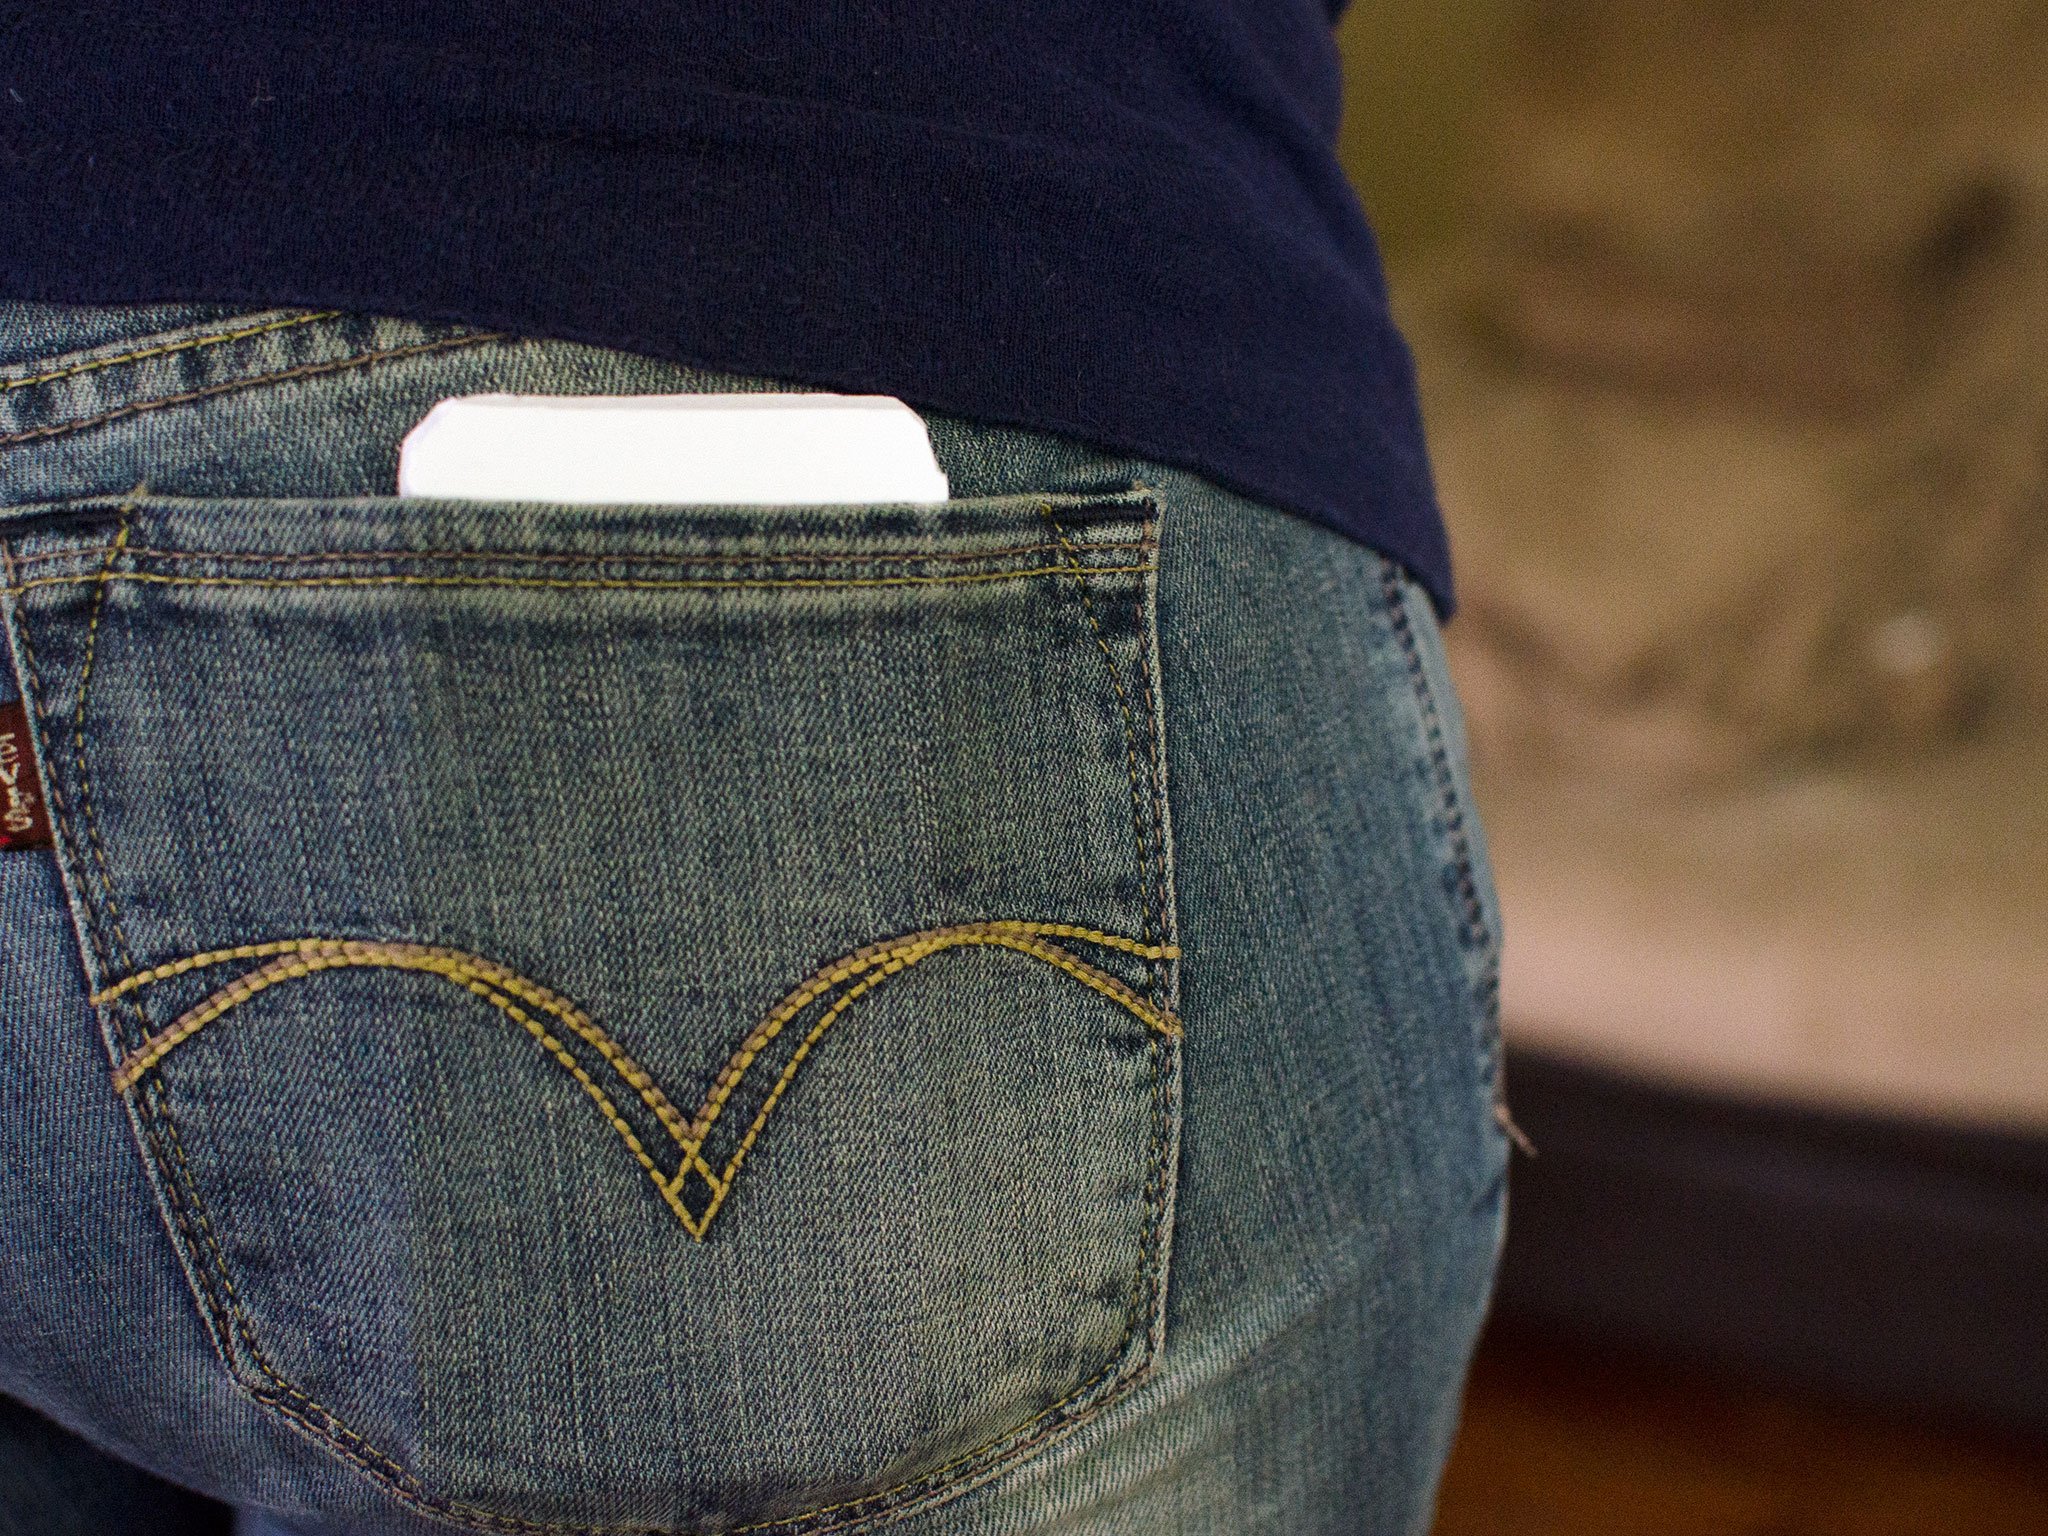 iPhone 6 mockup back pocket view